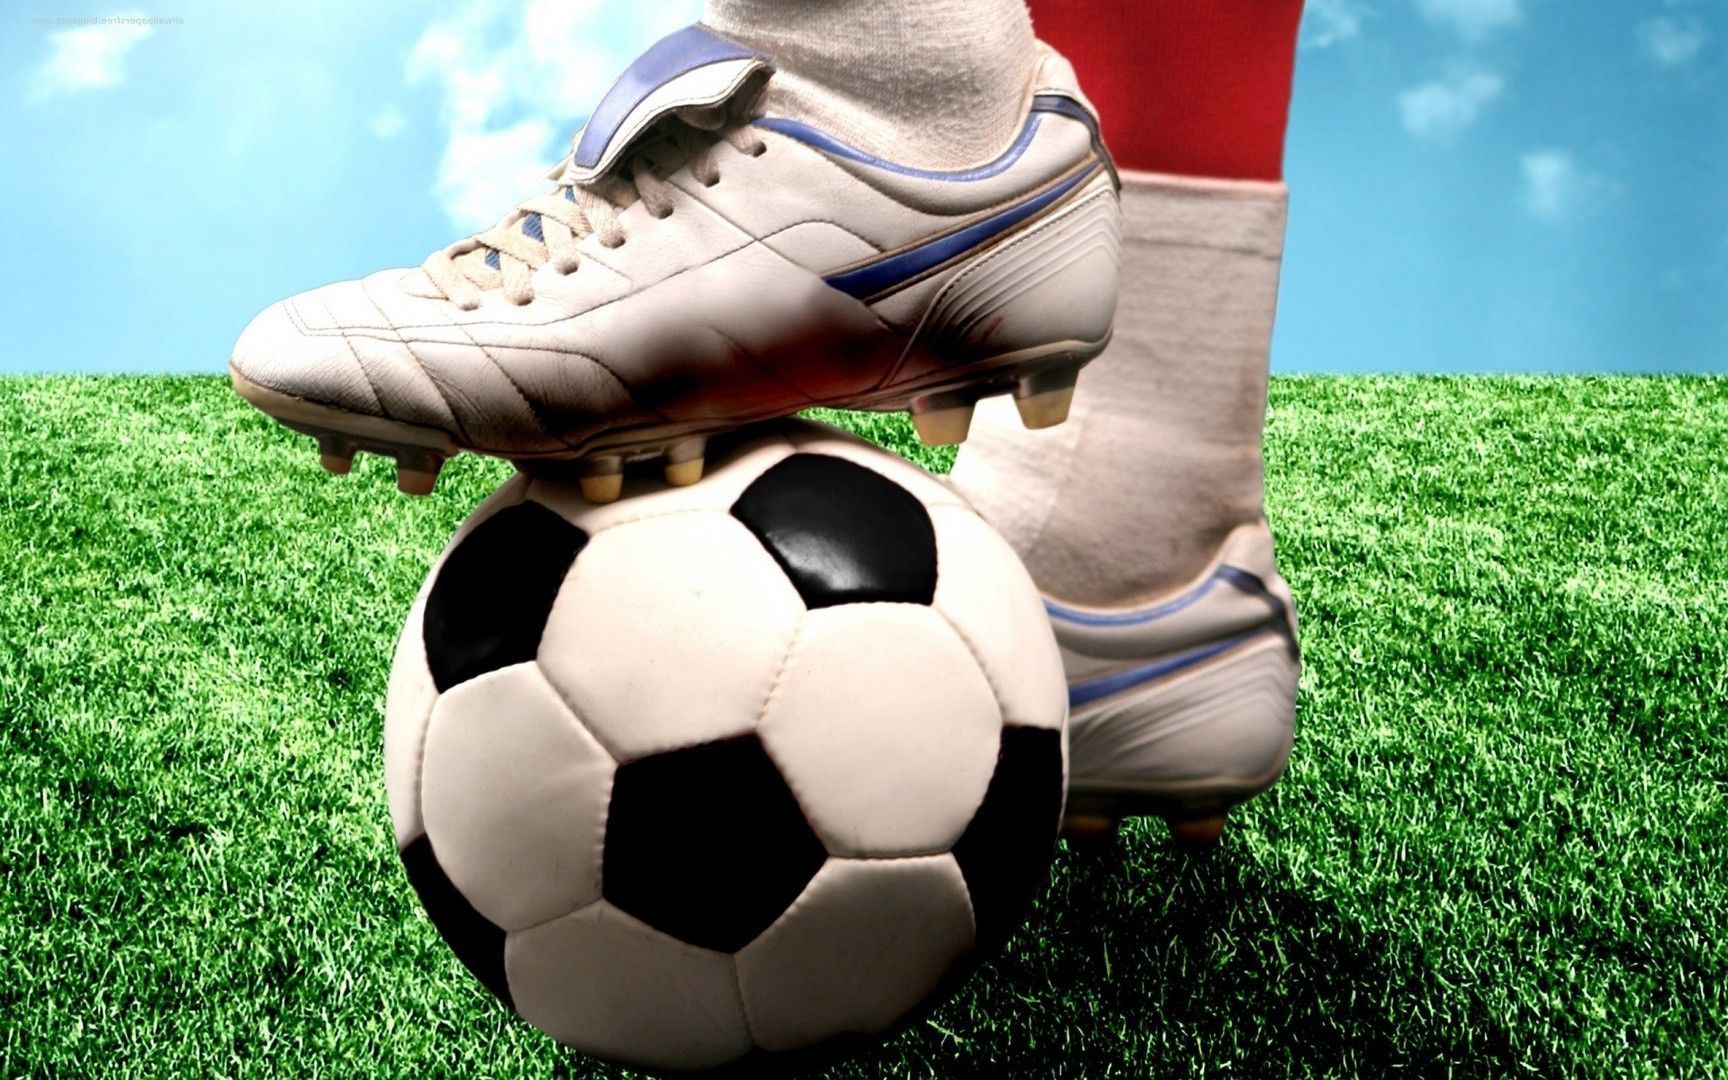 Football 1080p HD Wallpaper Sports | HD Wallpapers Source